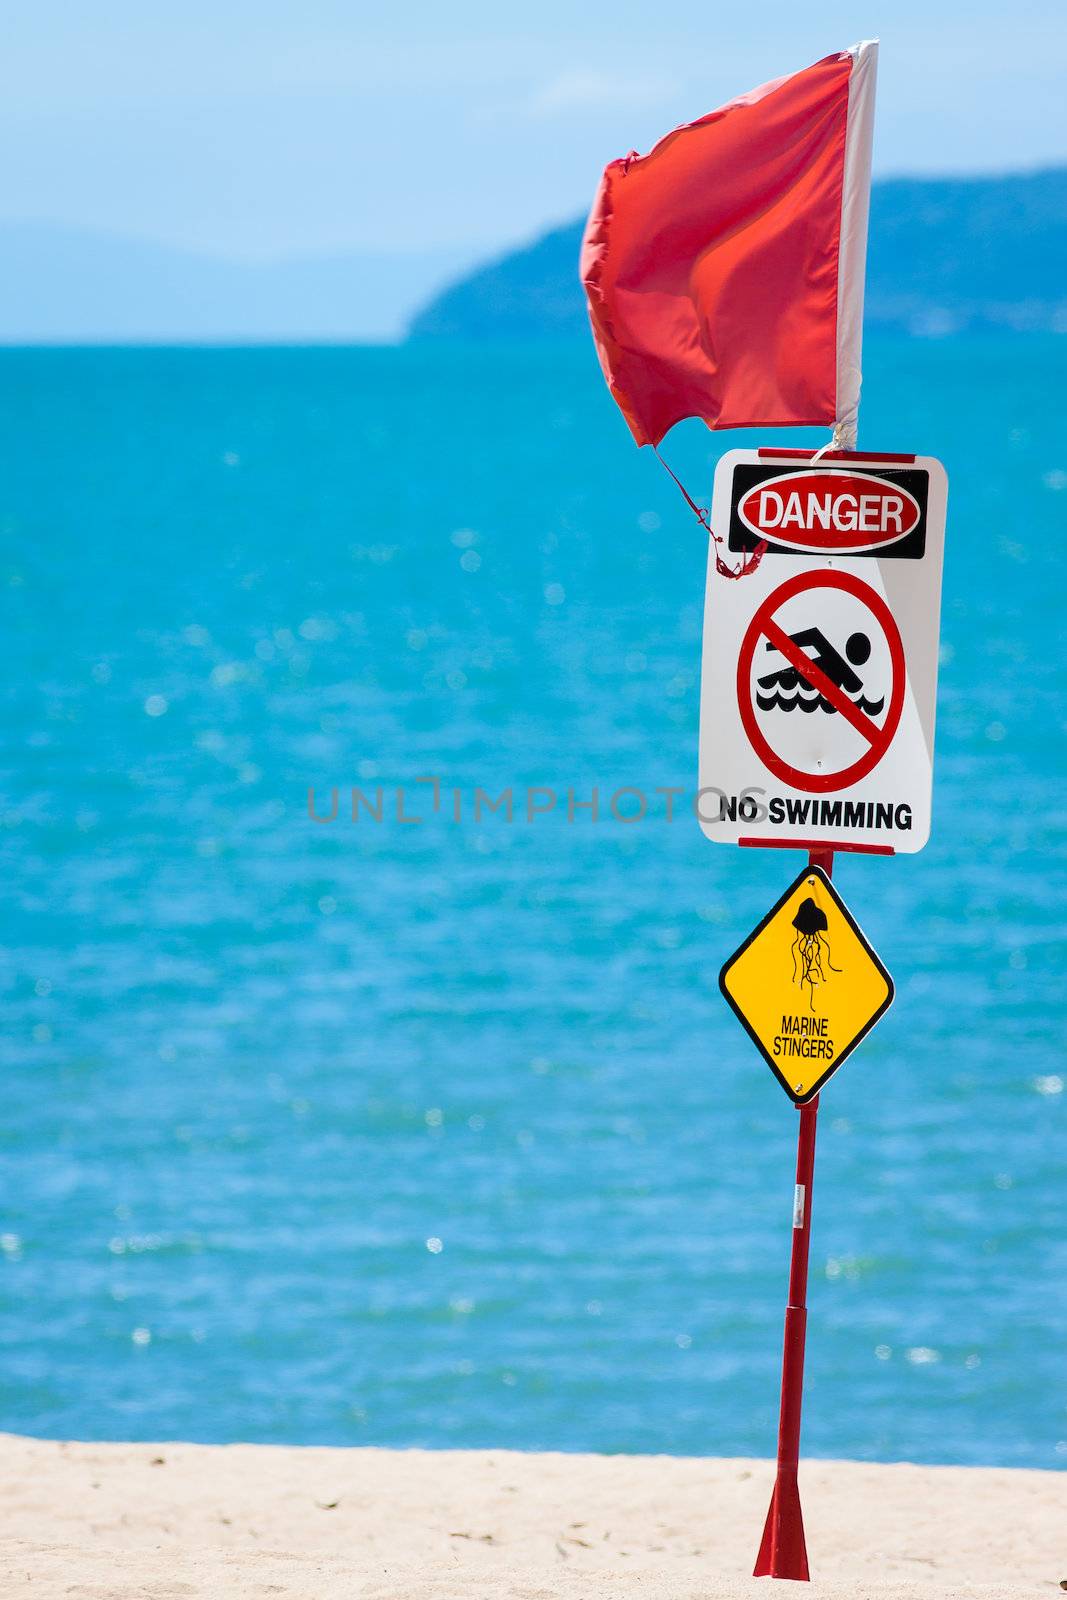 Jelly fish warning sign by Jaykayl